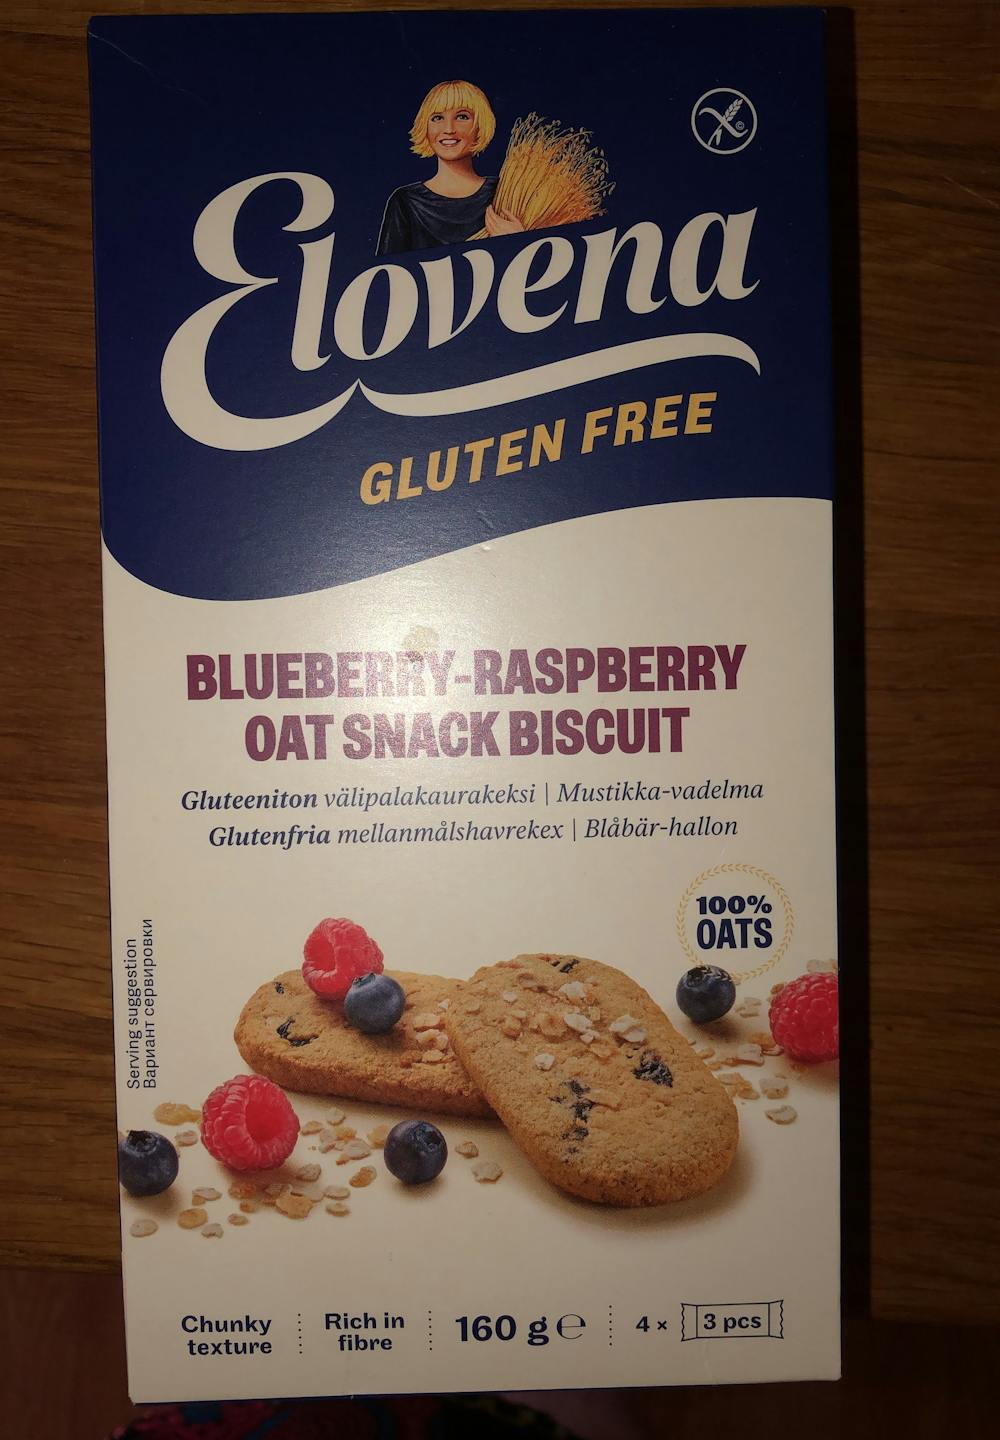 Blueberry-raspberry oat snacks biscuit, Elovena